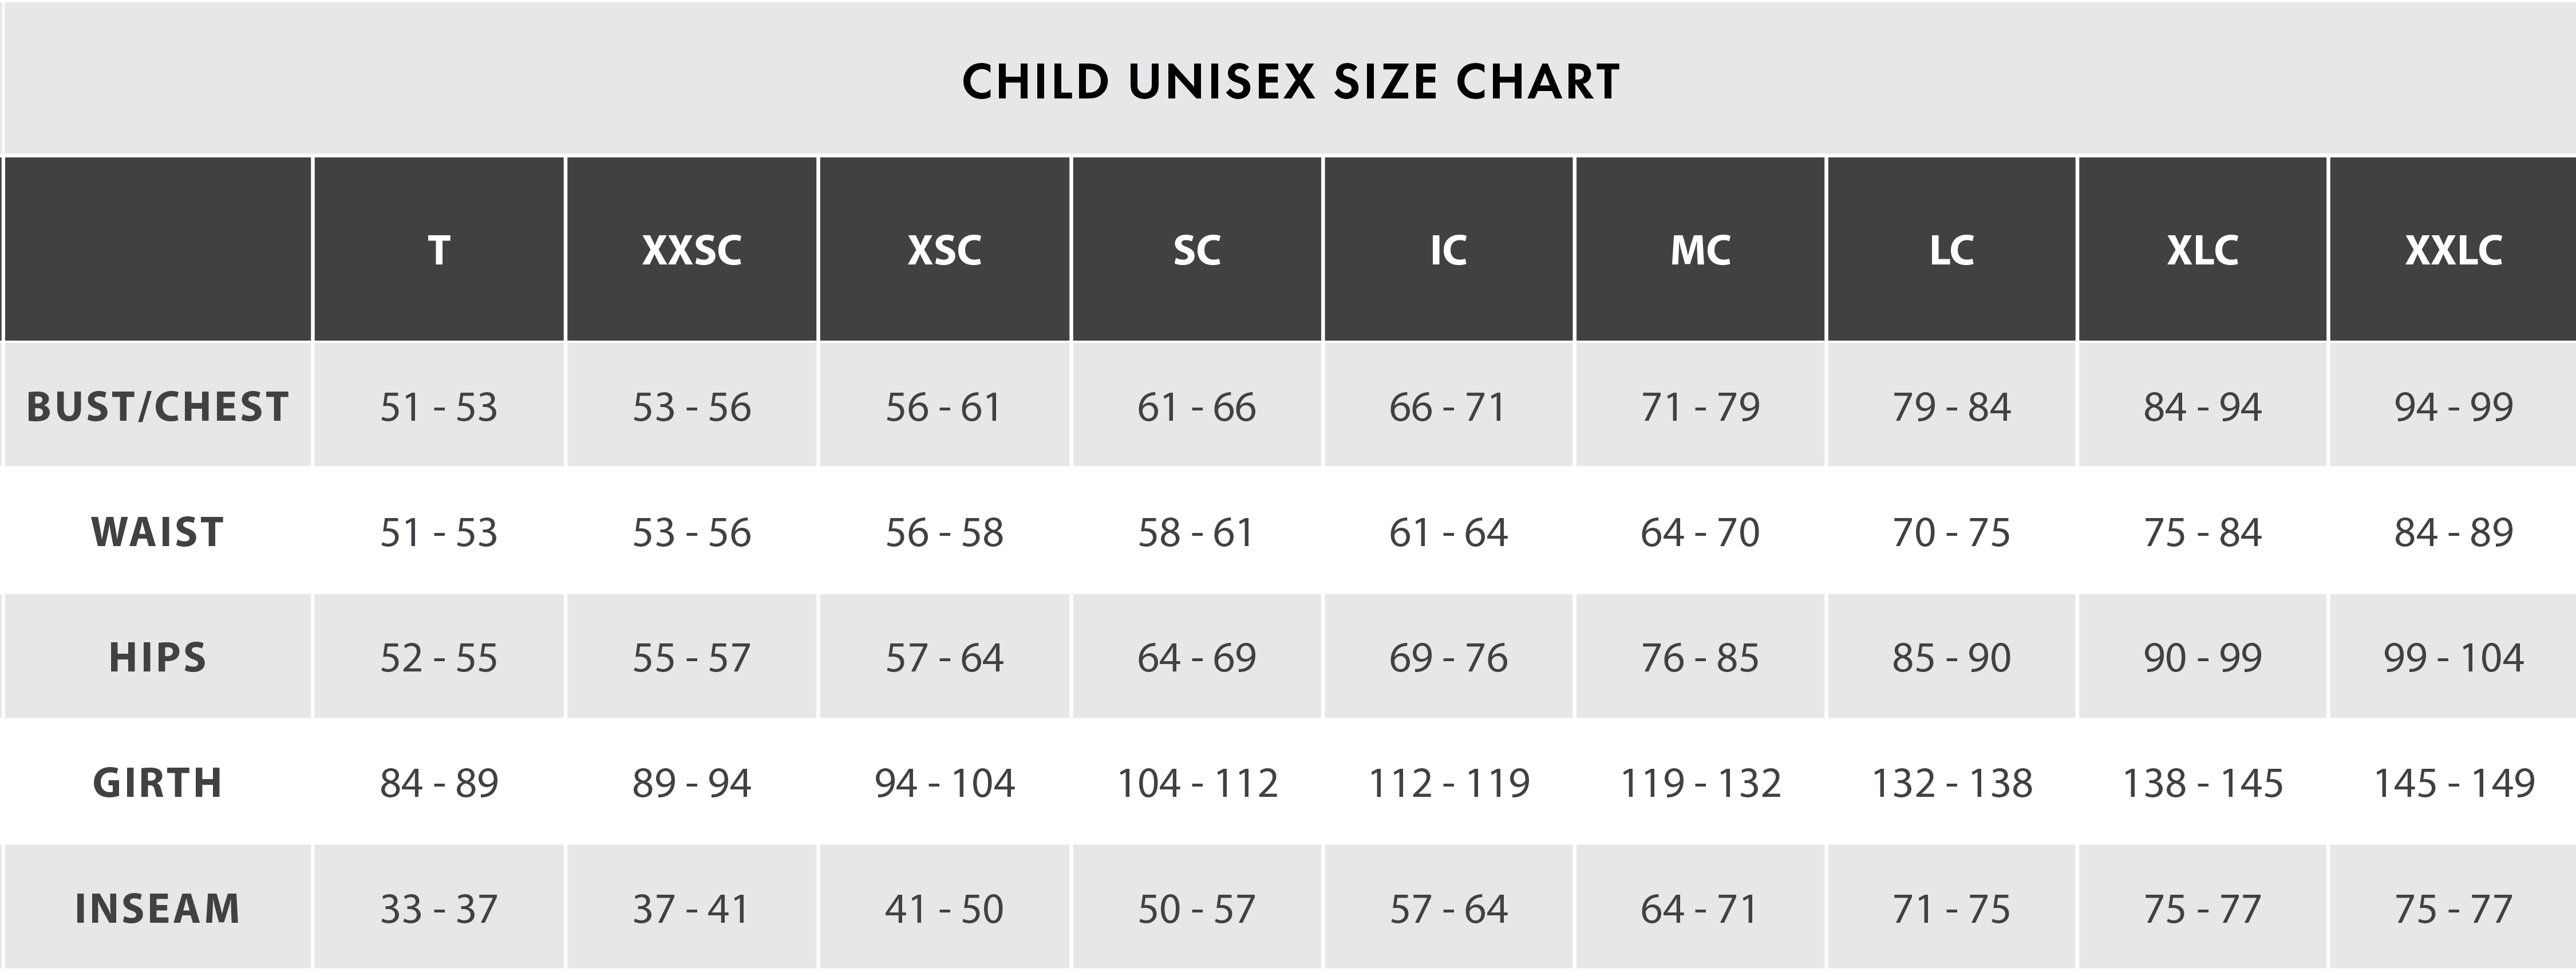 child unisex size chart centimeters